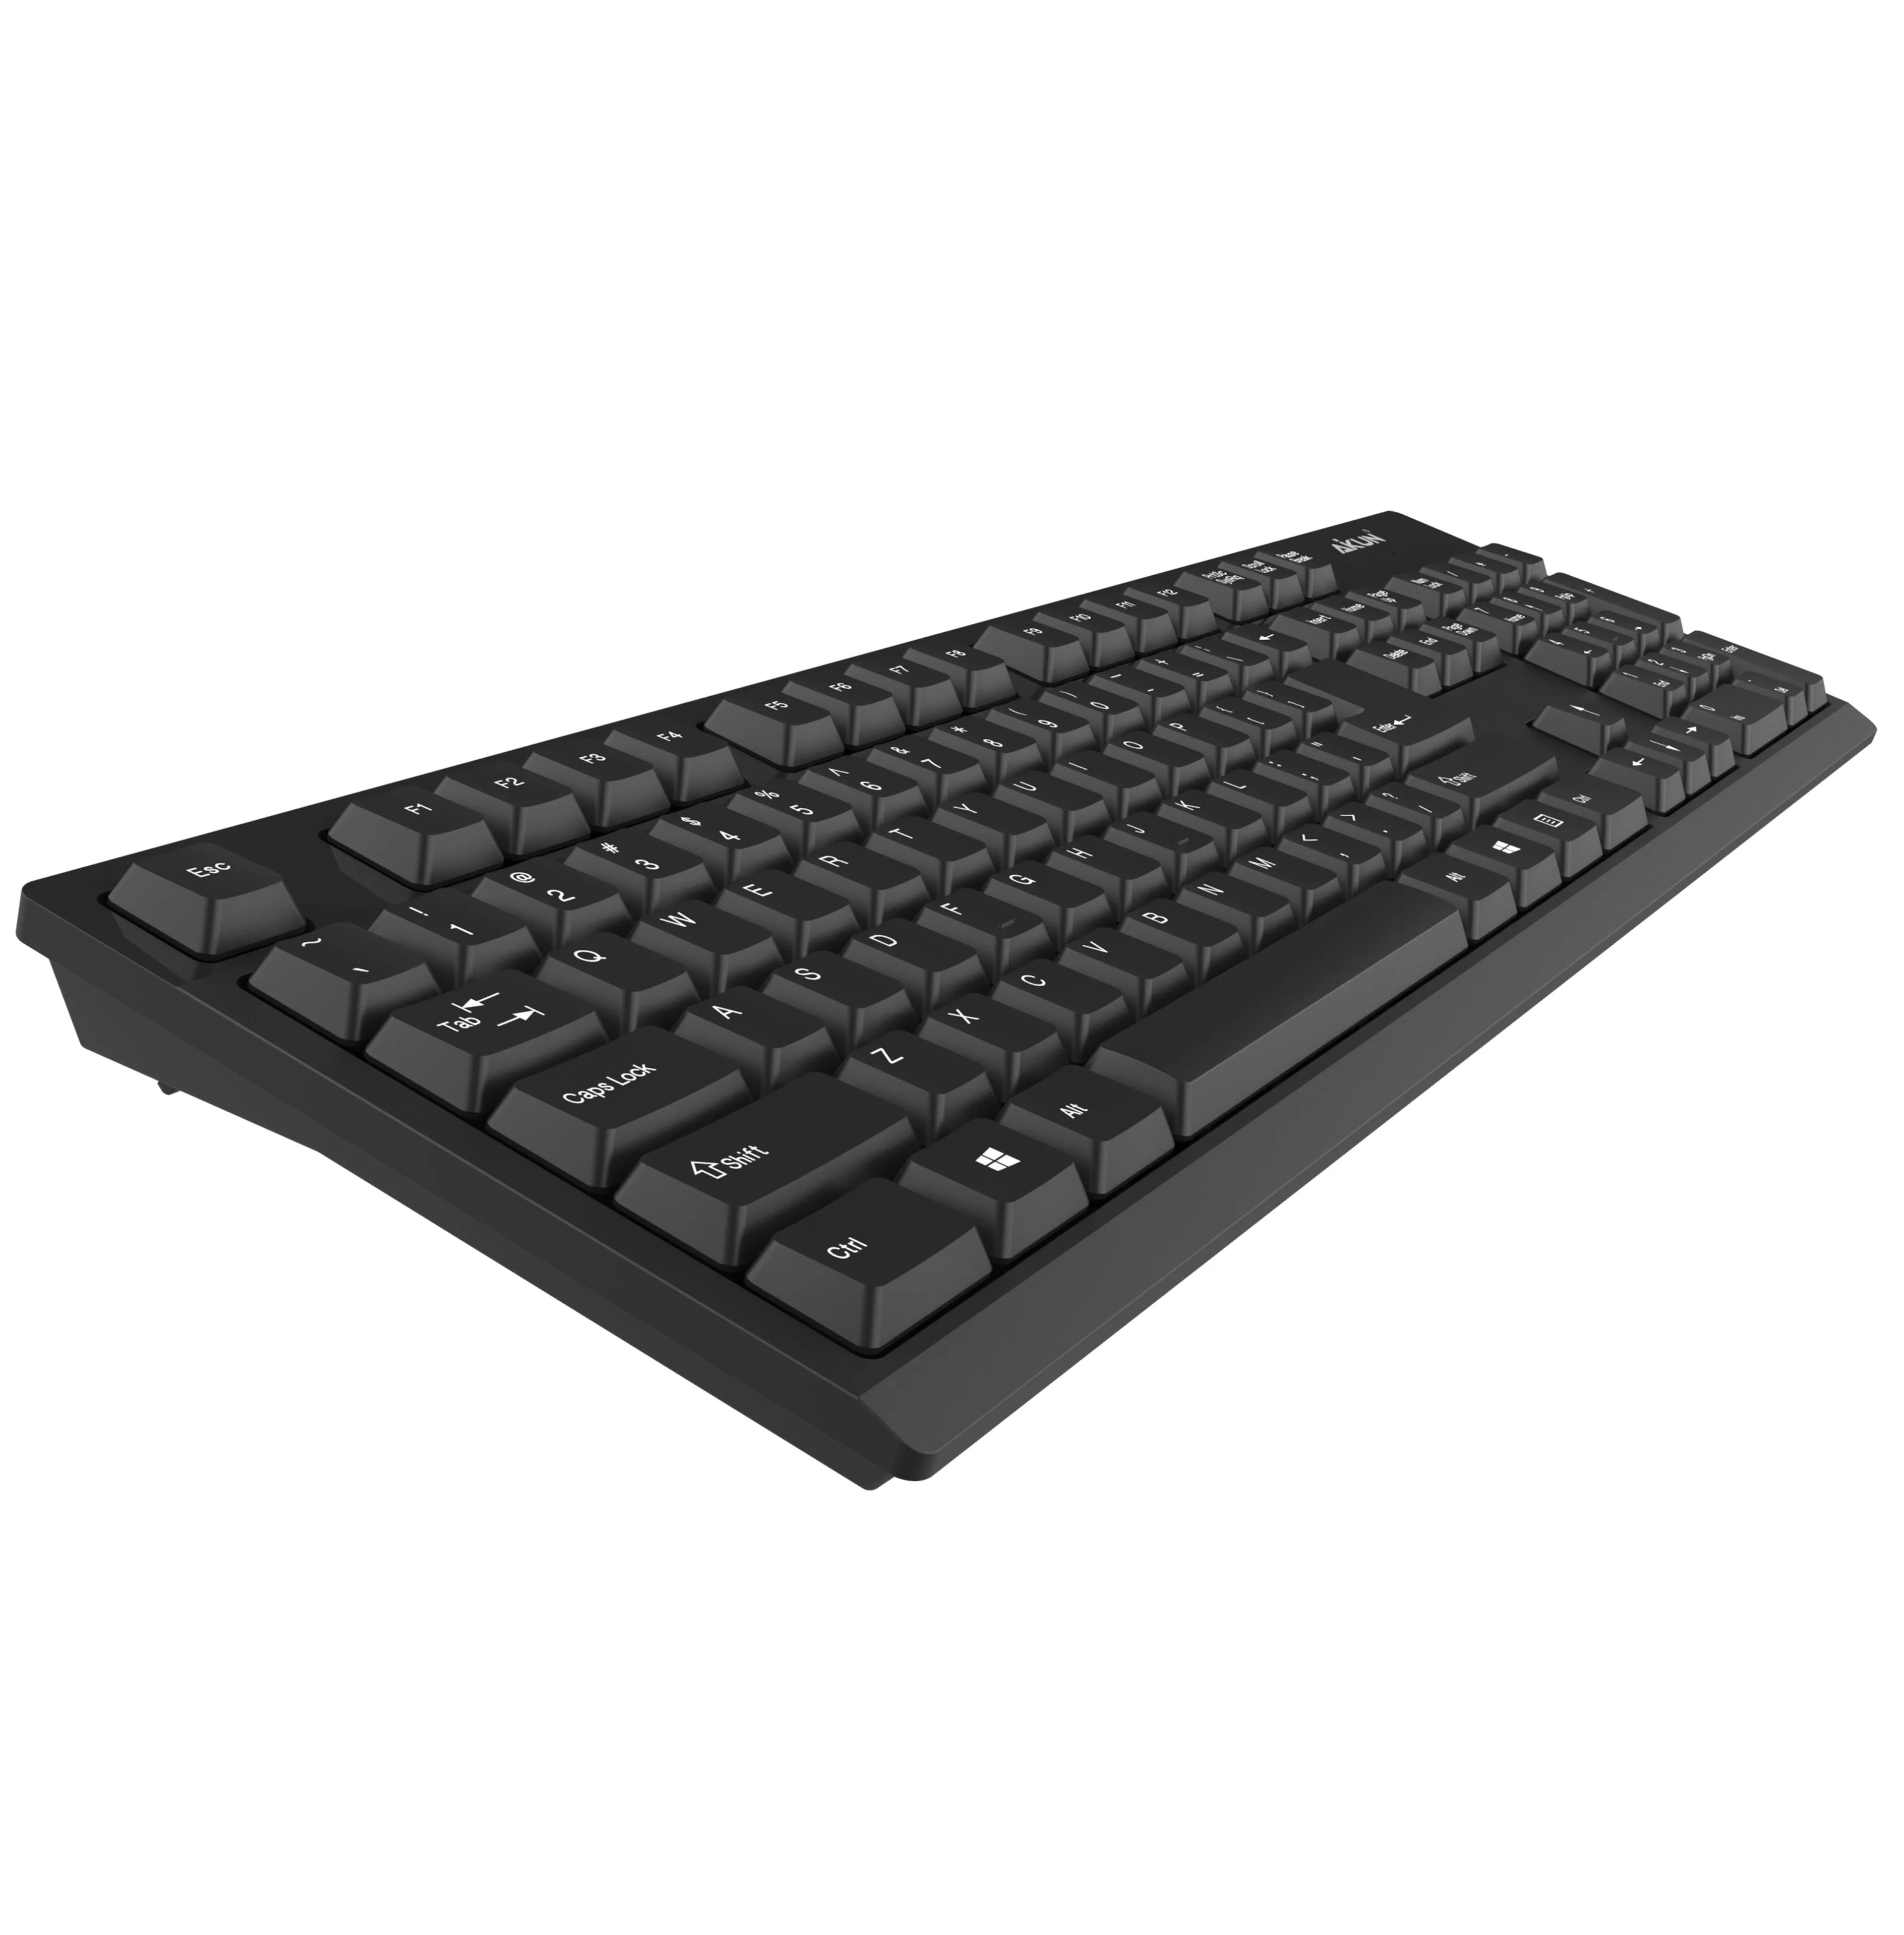 Takas Kırtasiye yerleşme  Wired Standard Keyboard - Buy Standard Keyboard,108 Keys Standard Keyboard,Best  Wired Keyboard Product on Alibaba.com